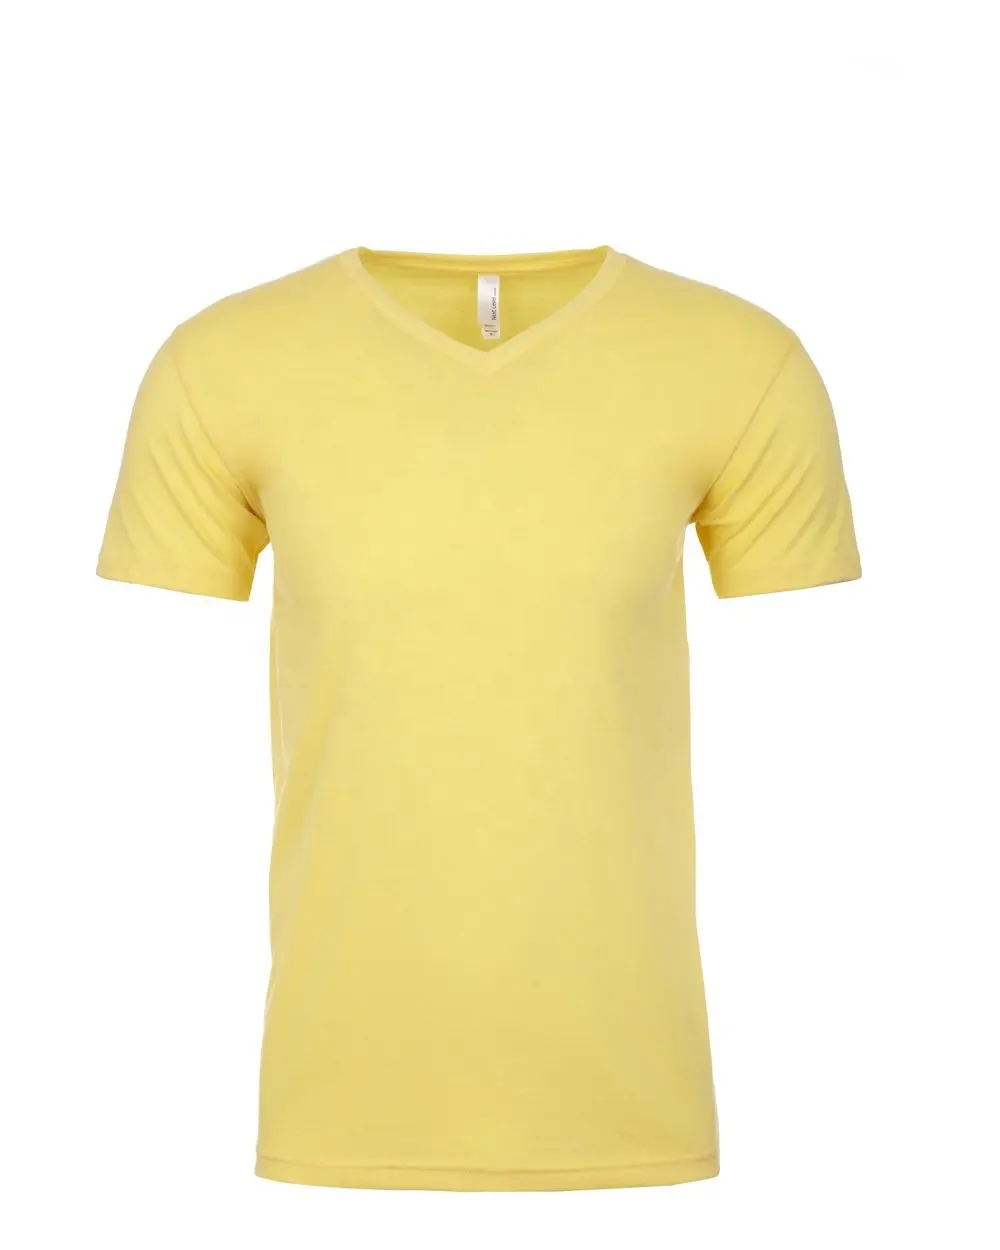 Volgend Niveau 6440 Stijl Sued V-Hals T-Shirt Bananencrème 60/40 Gekamd Katoen/Polyester Suaded Jersey Ademend Suaded T-Shirt